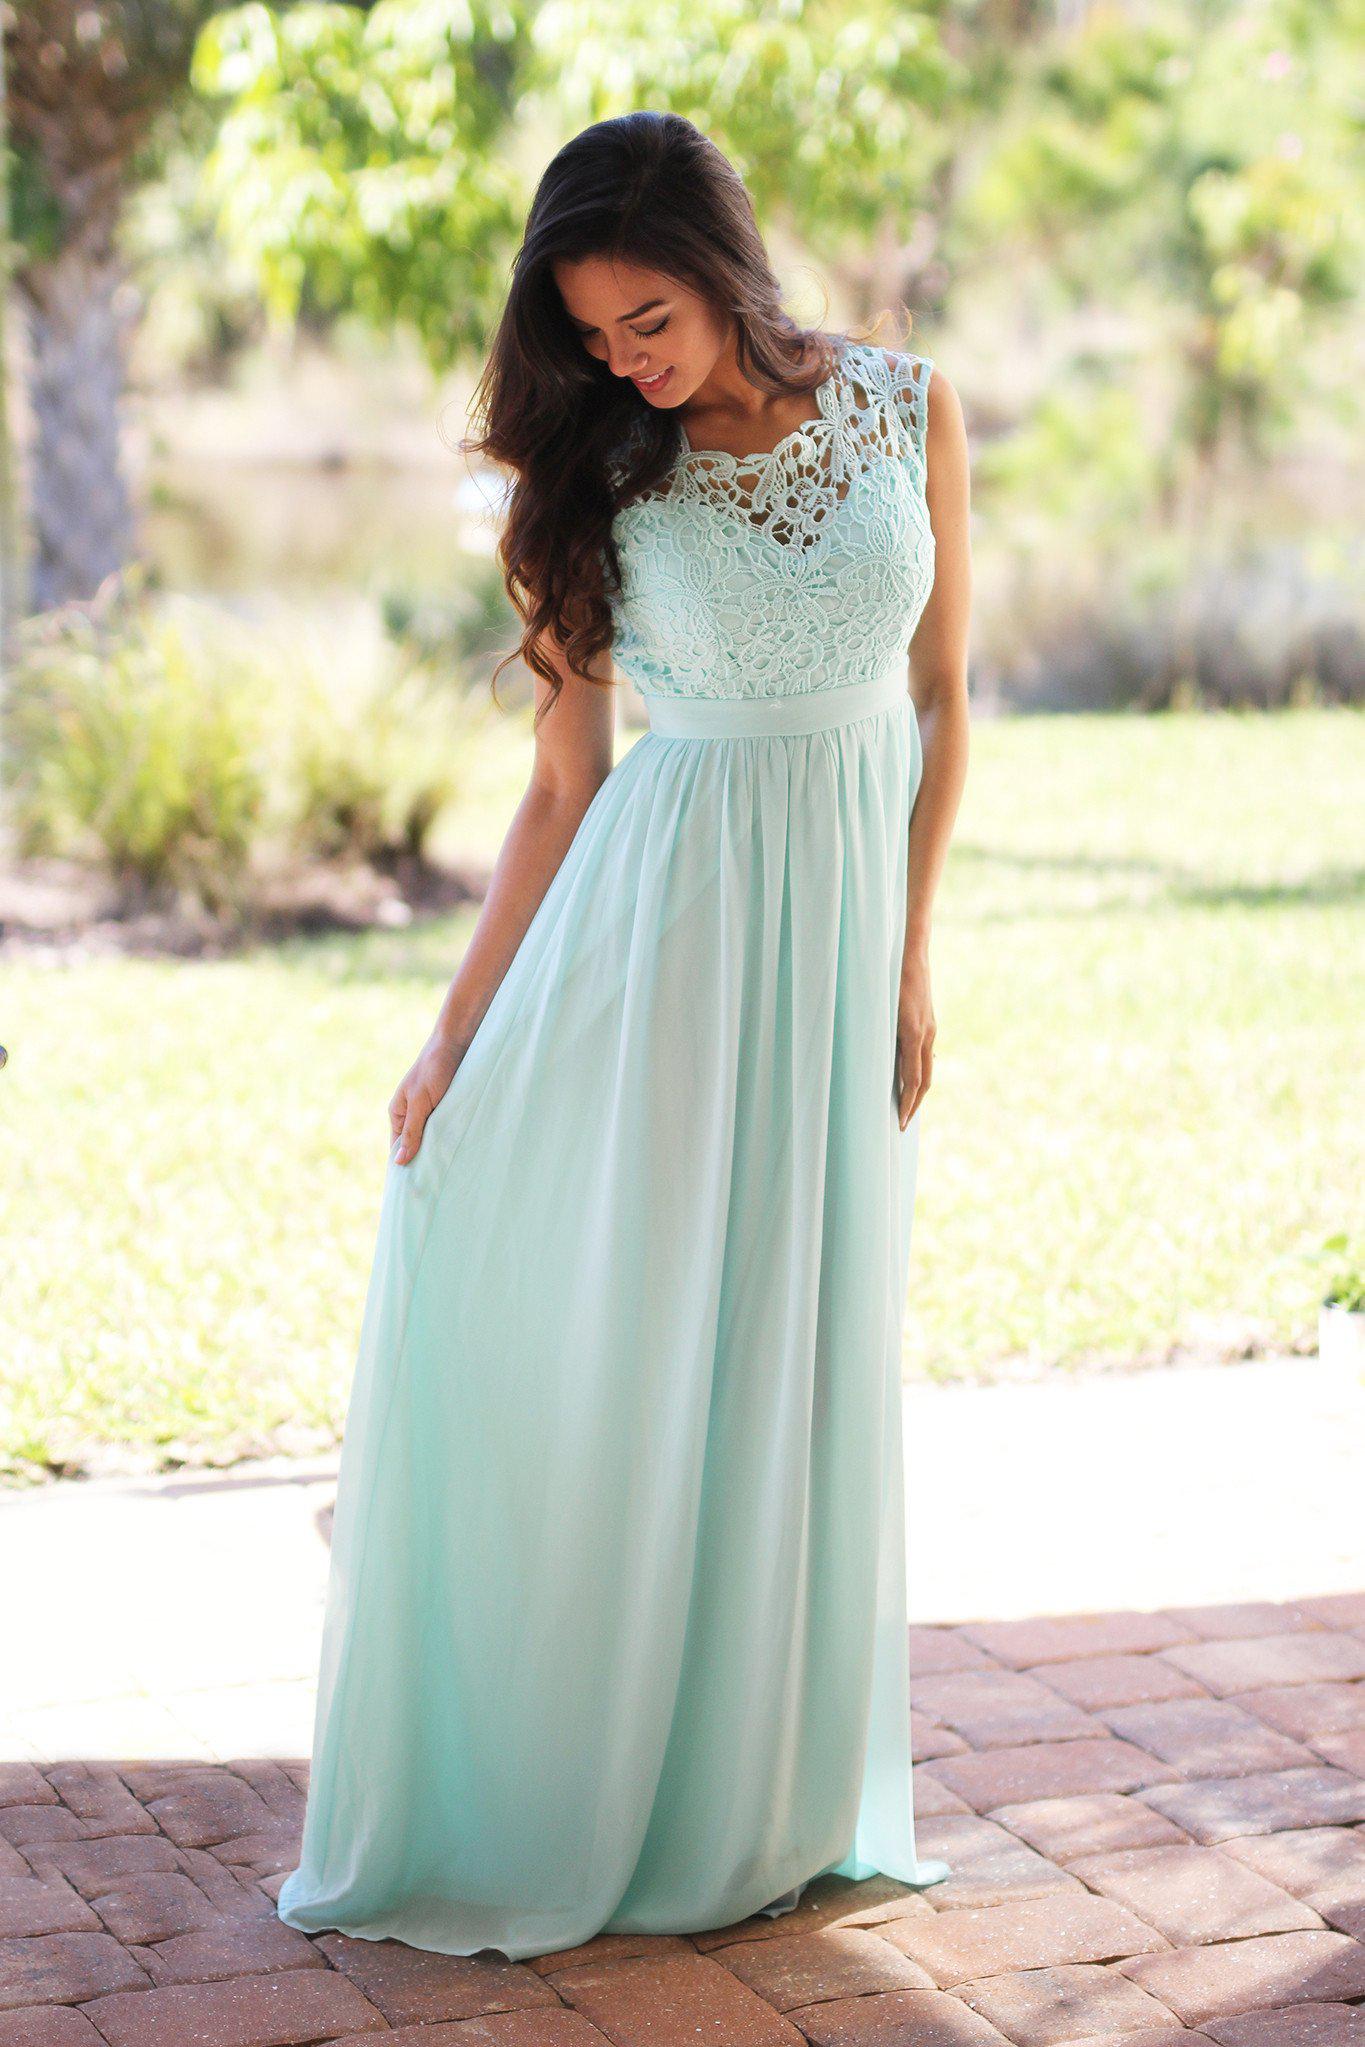 pretty dress